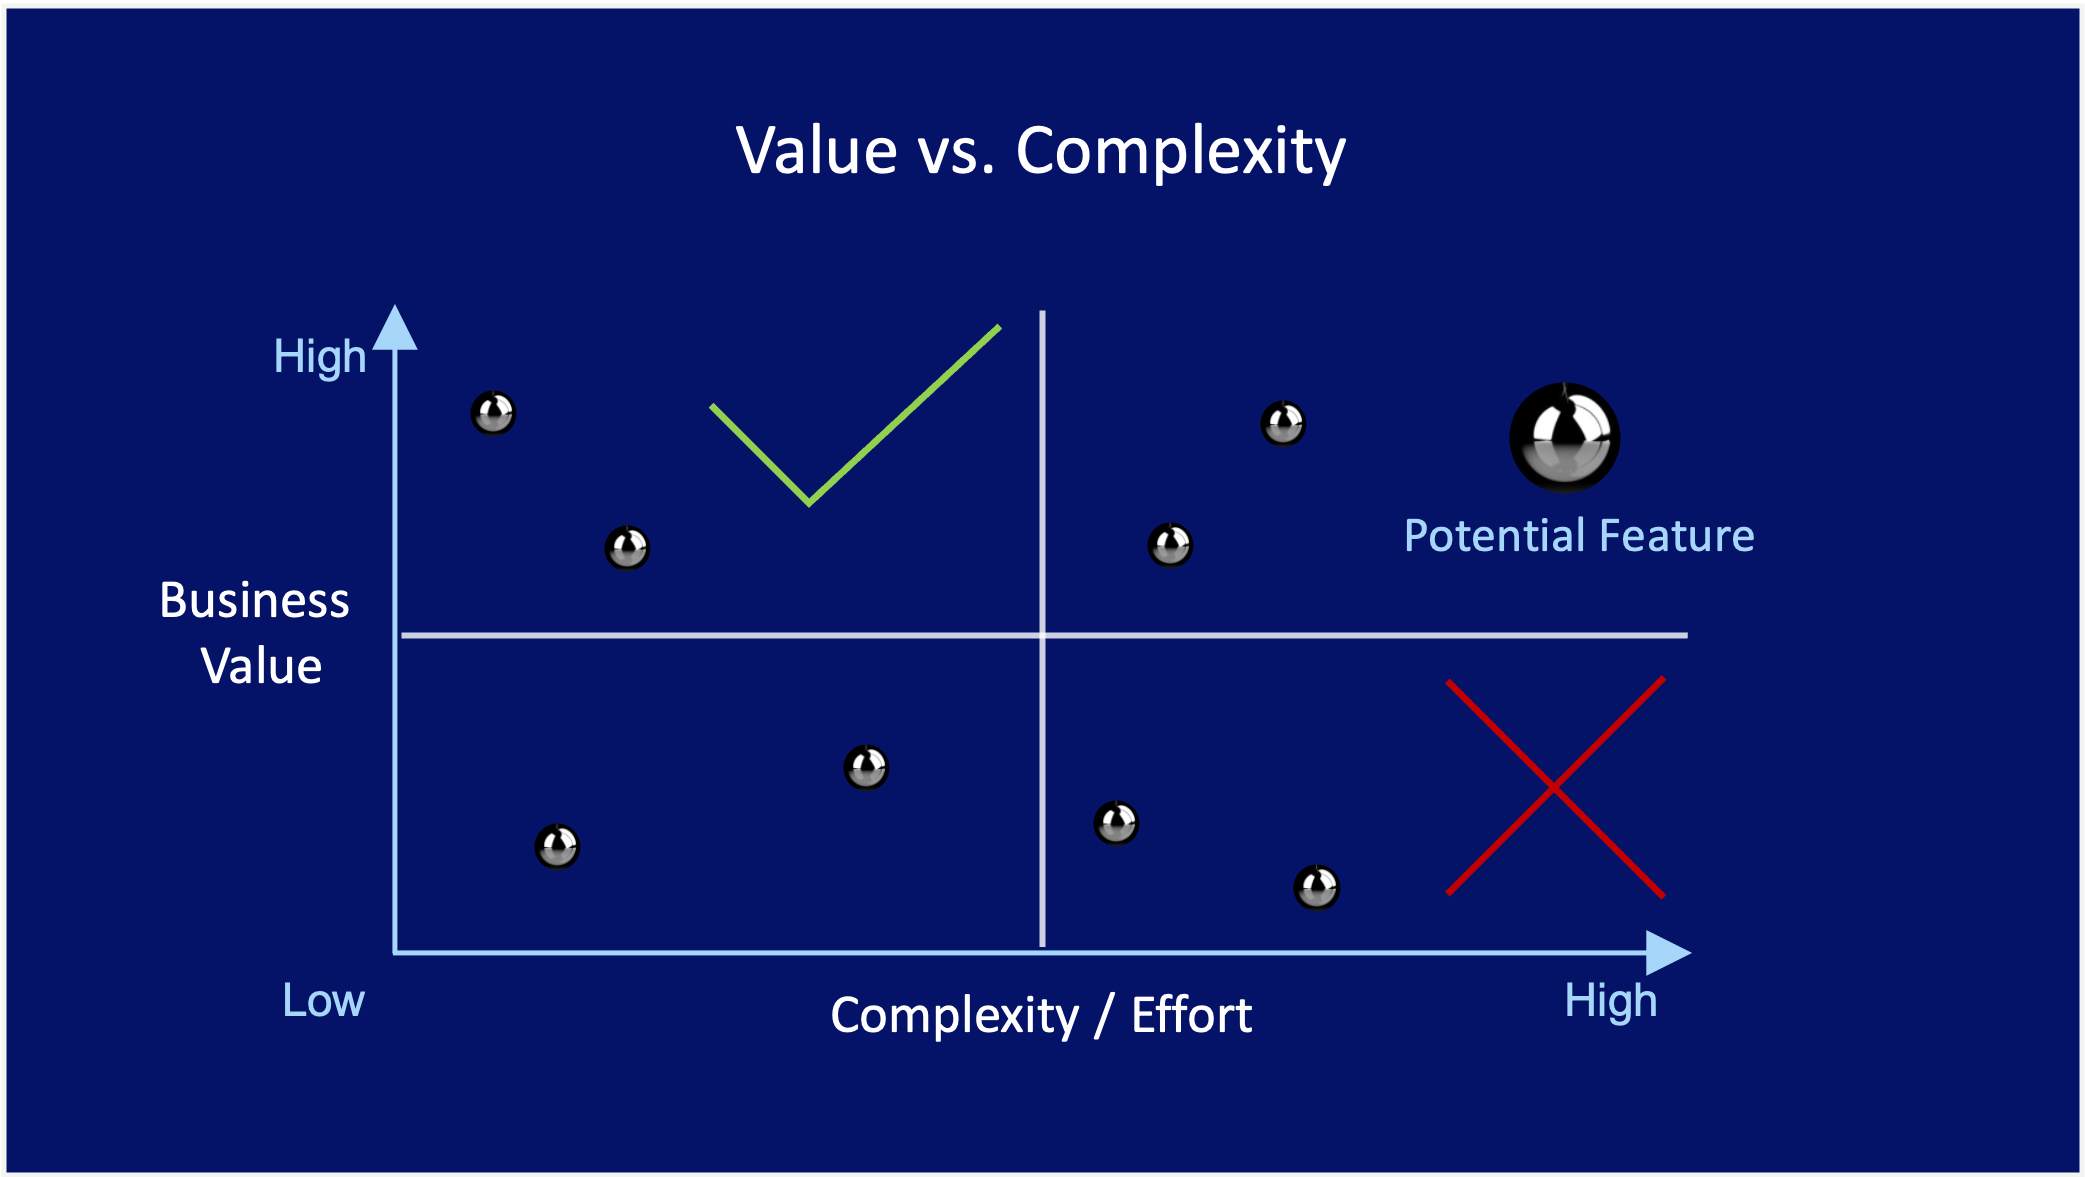 Value Versus Complexity Matrix - HICE product prioritisation framework